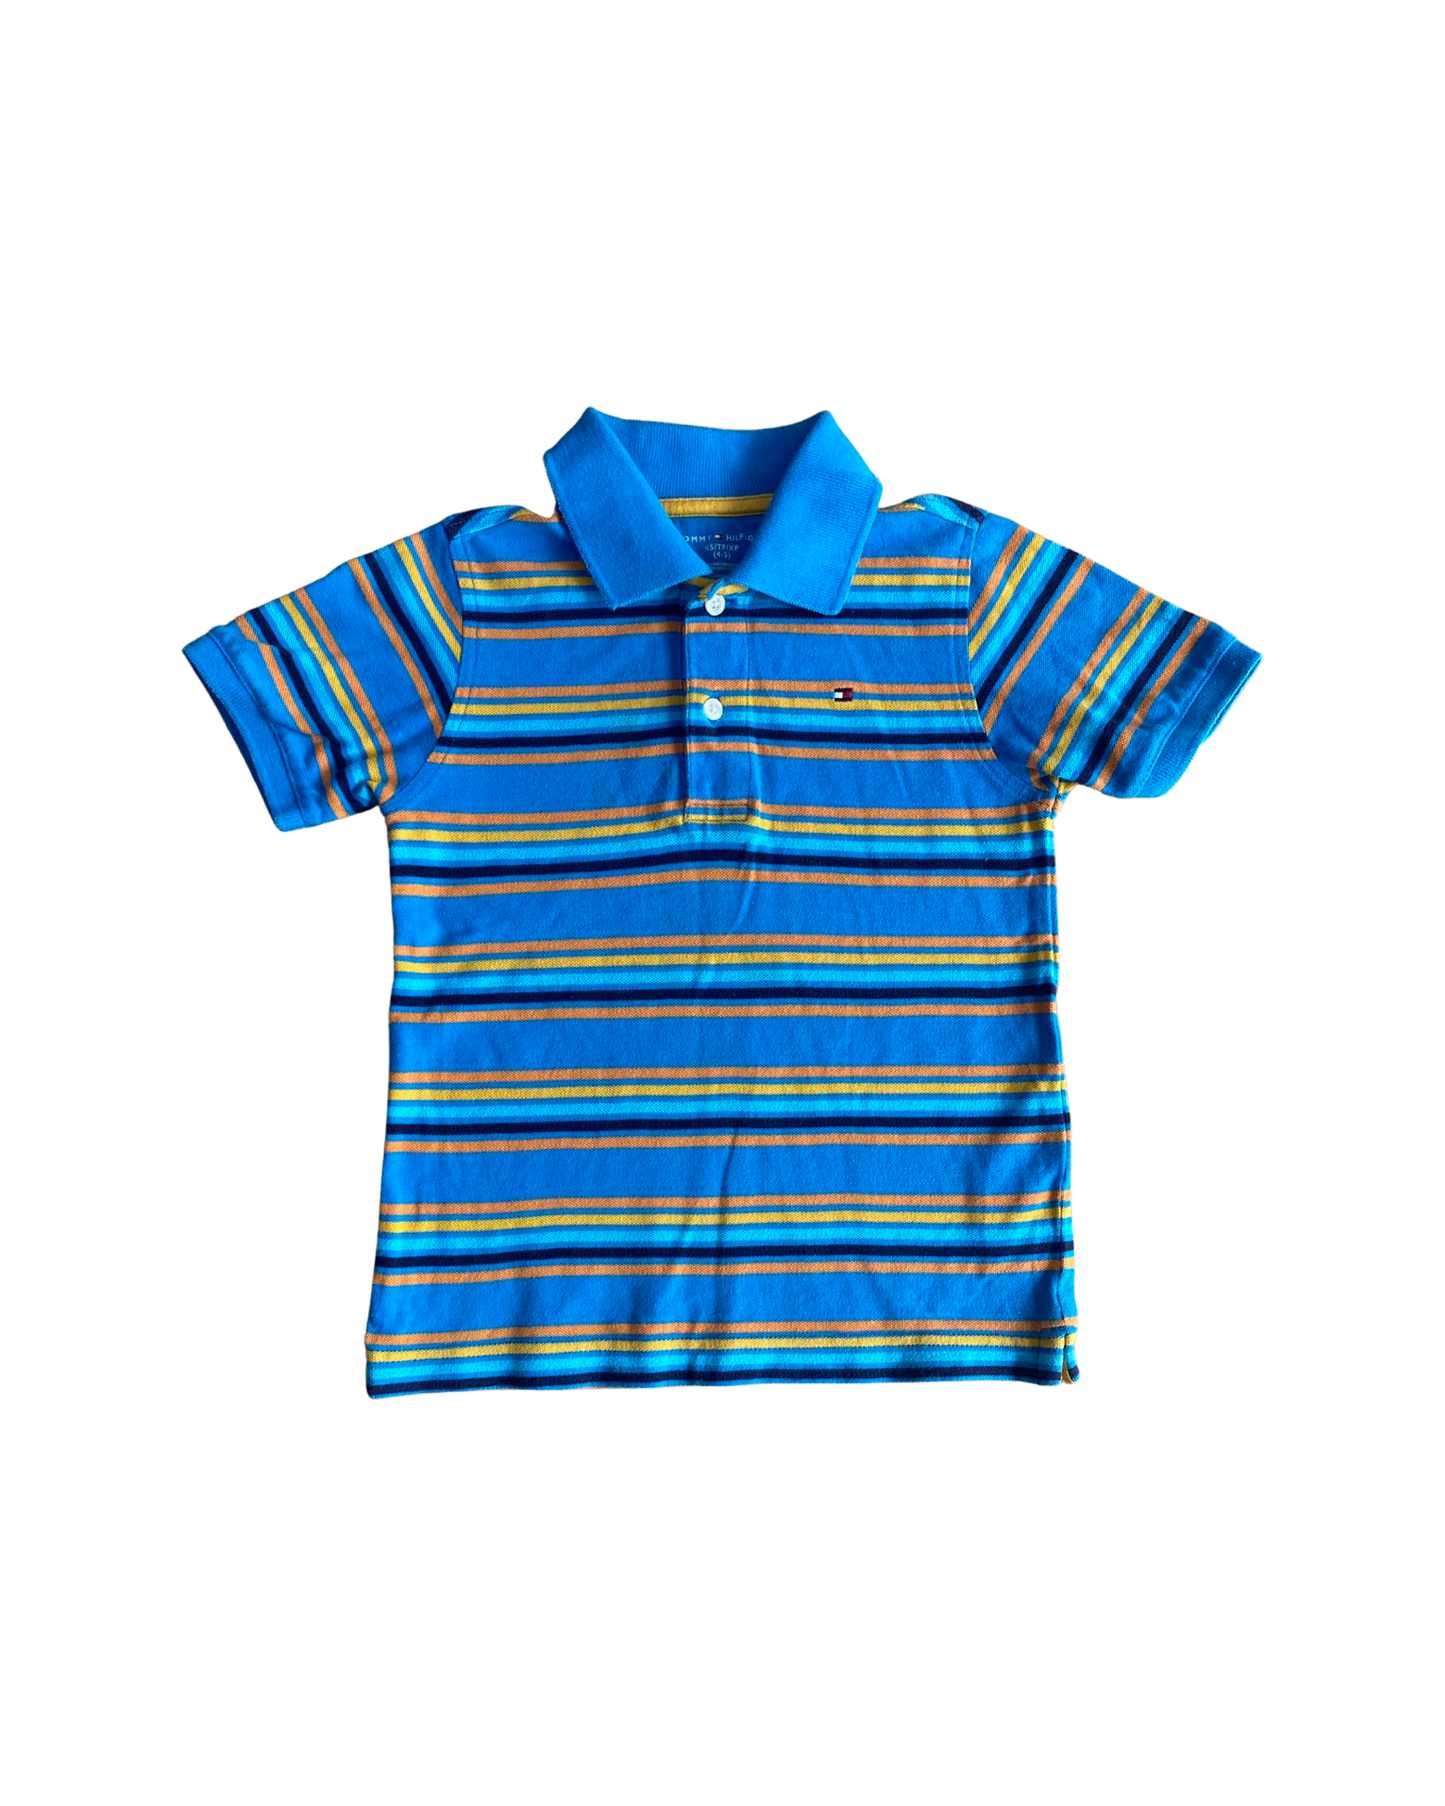 Tommy Hilfiger striped polo shirt (4-5yrs)